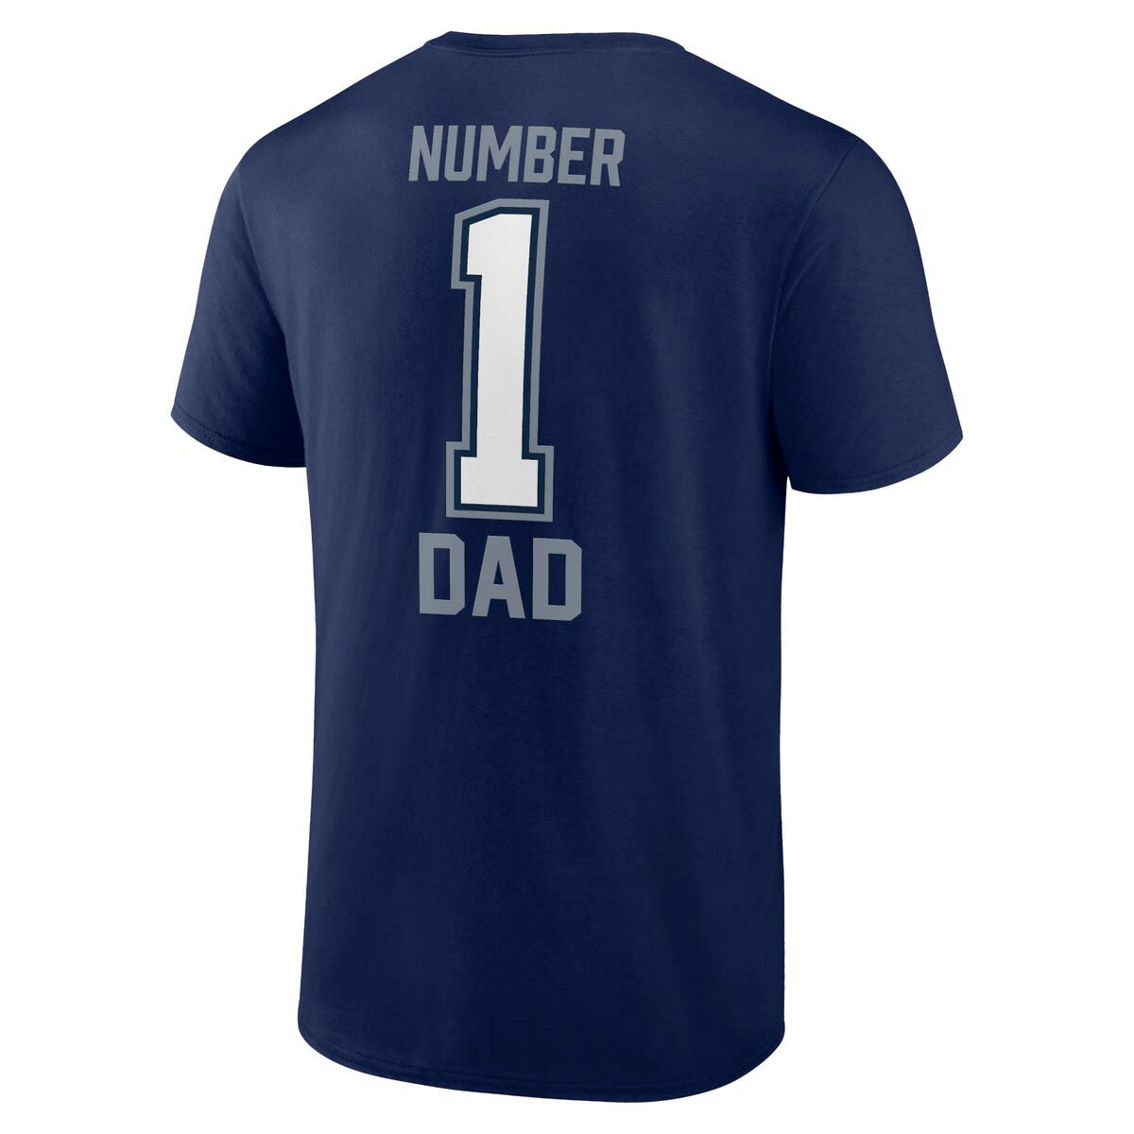 Fanatics Men's Fanatics Navy Dallas Cowboys Father's Day #1 Dad T-Shirt - Image 4 of 4